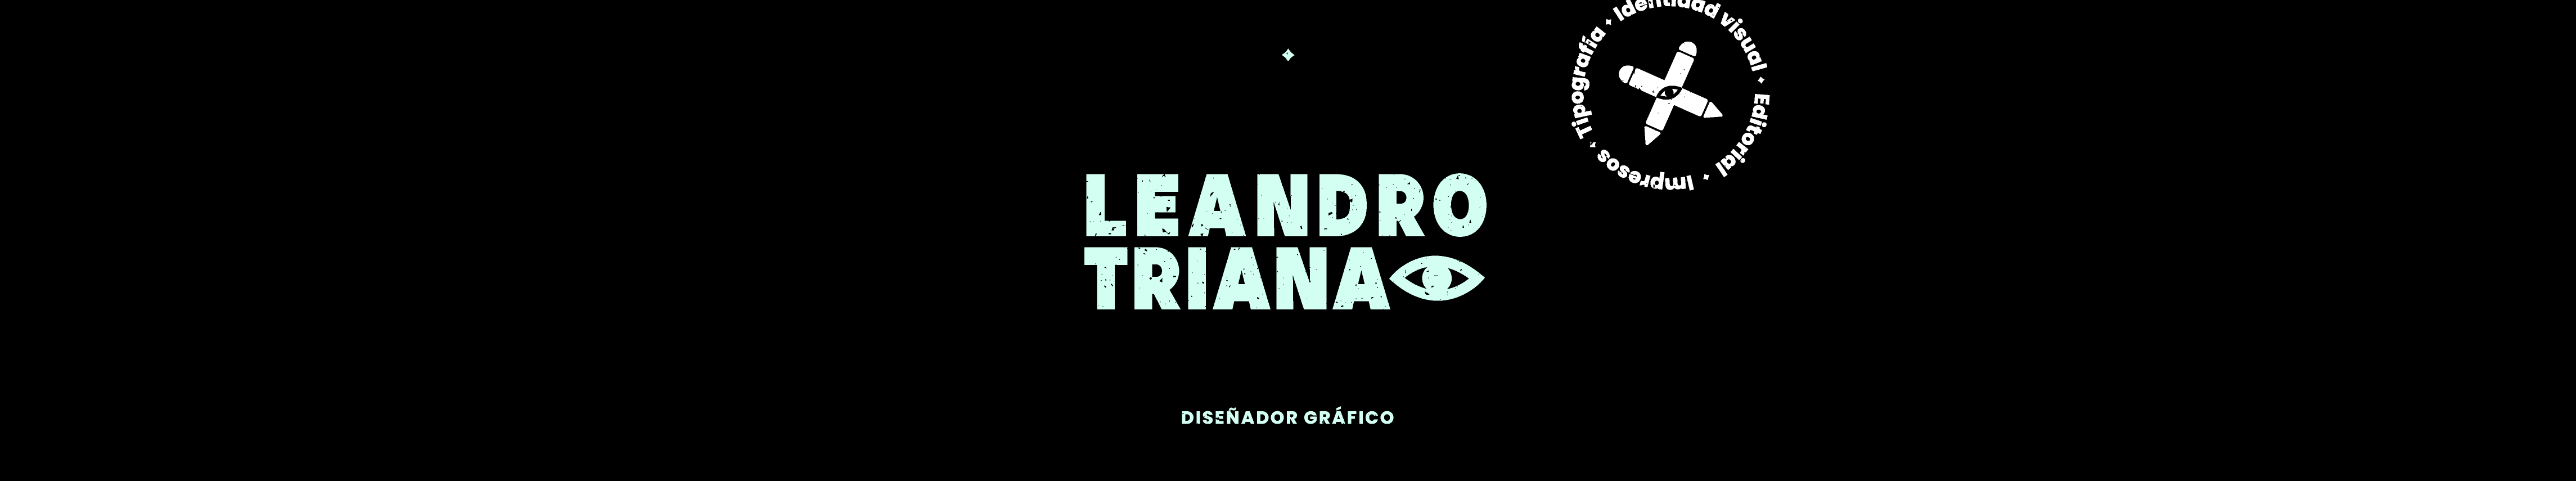 Leandro Triana Trujillos profilbanner